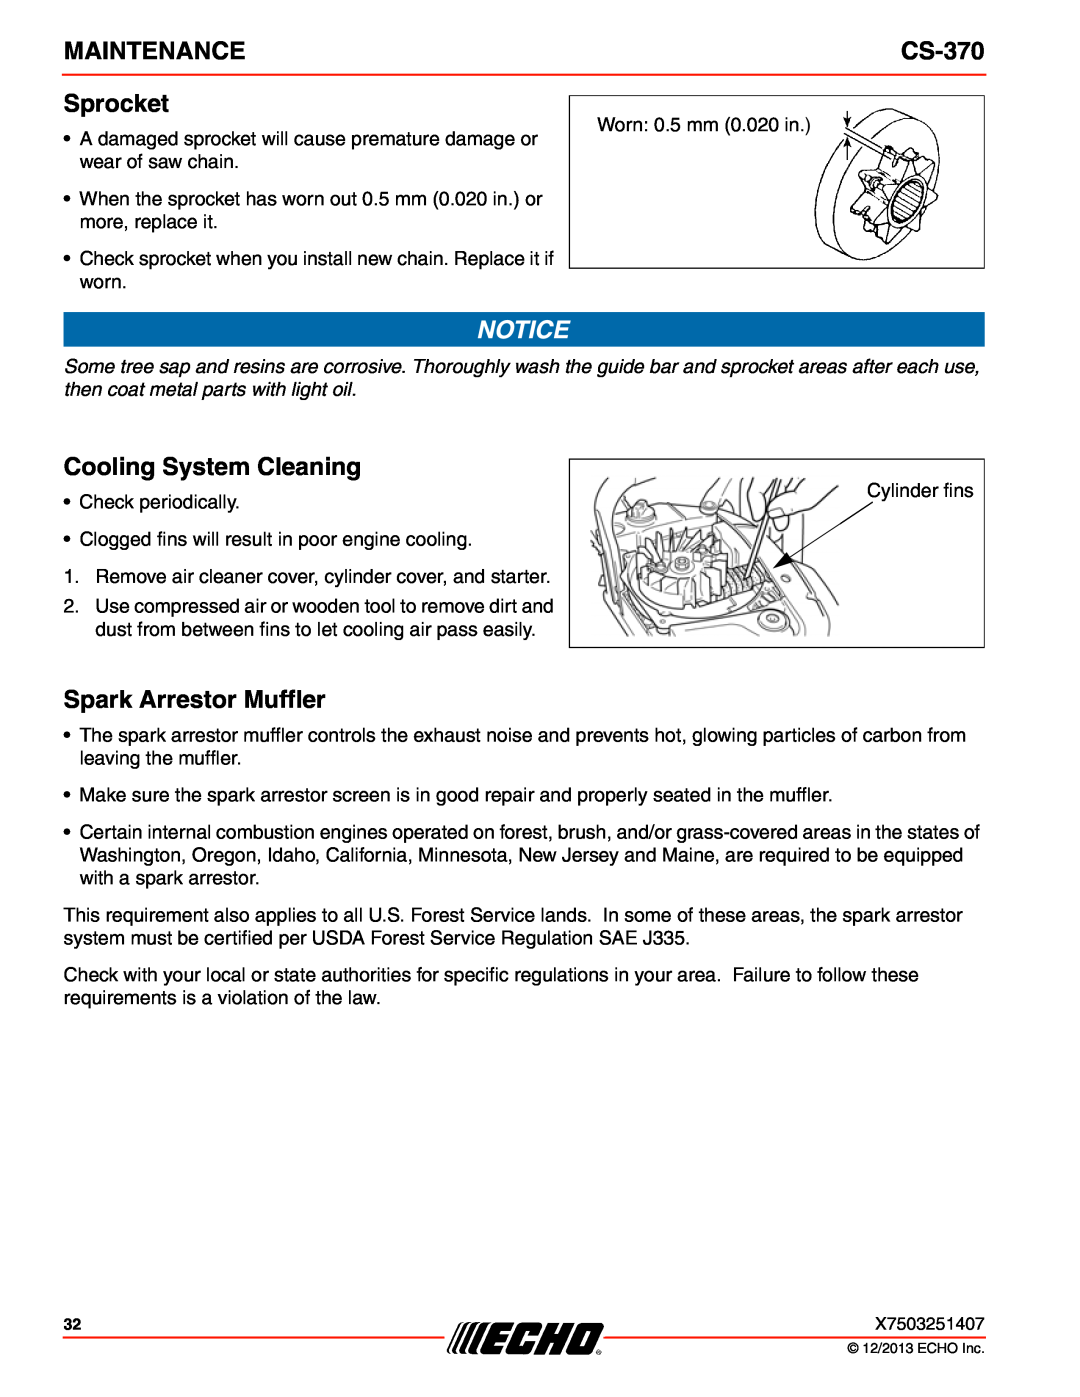 Echo CS-370 instruction manual Sprocket, Cooling System Cleaning, Spark Arrestor Muffler, Maintenance 